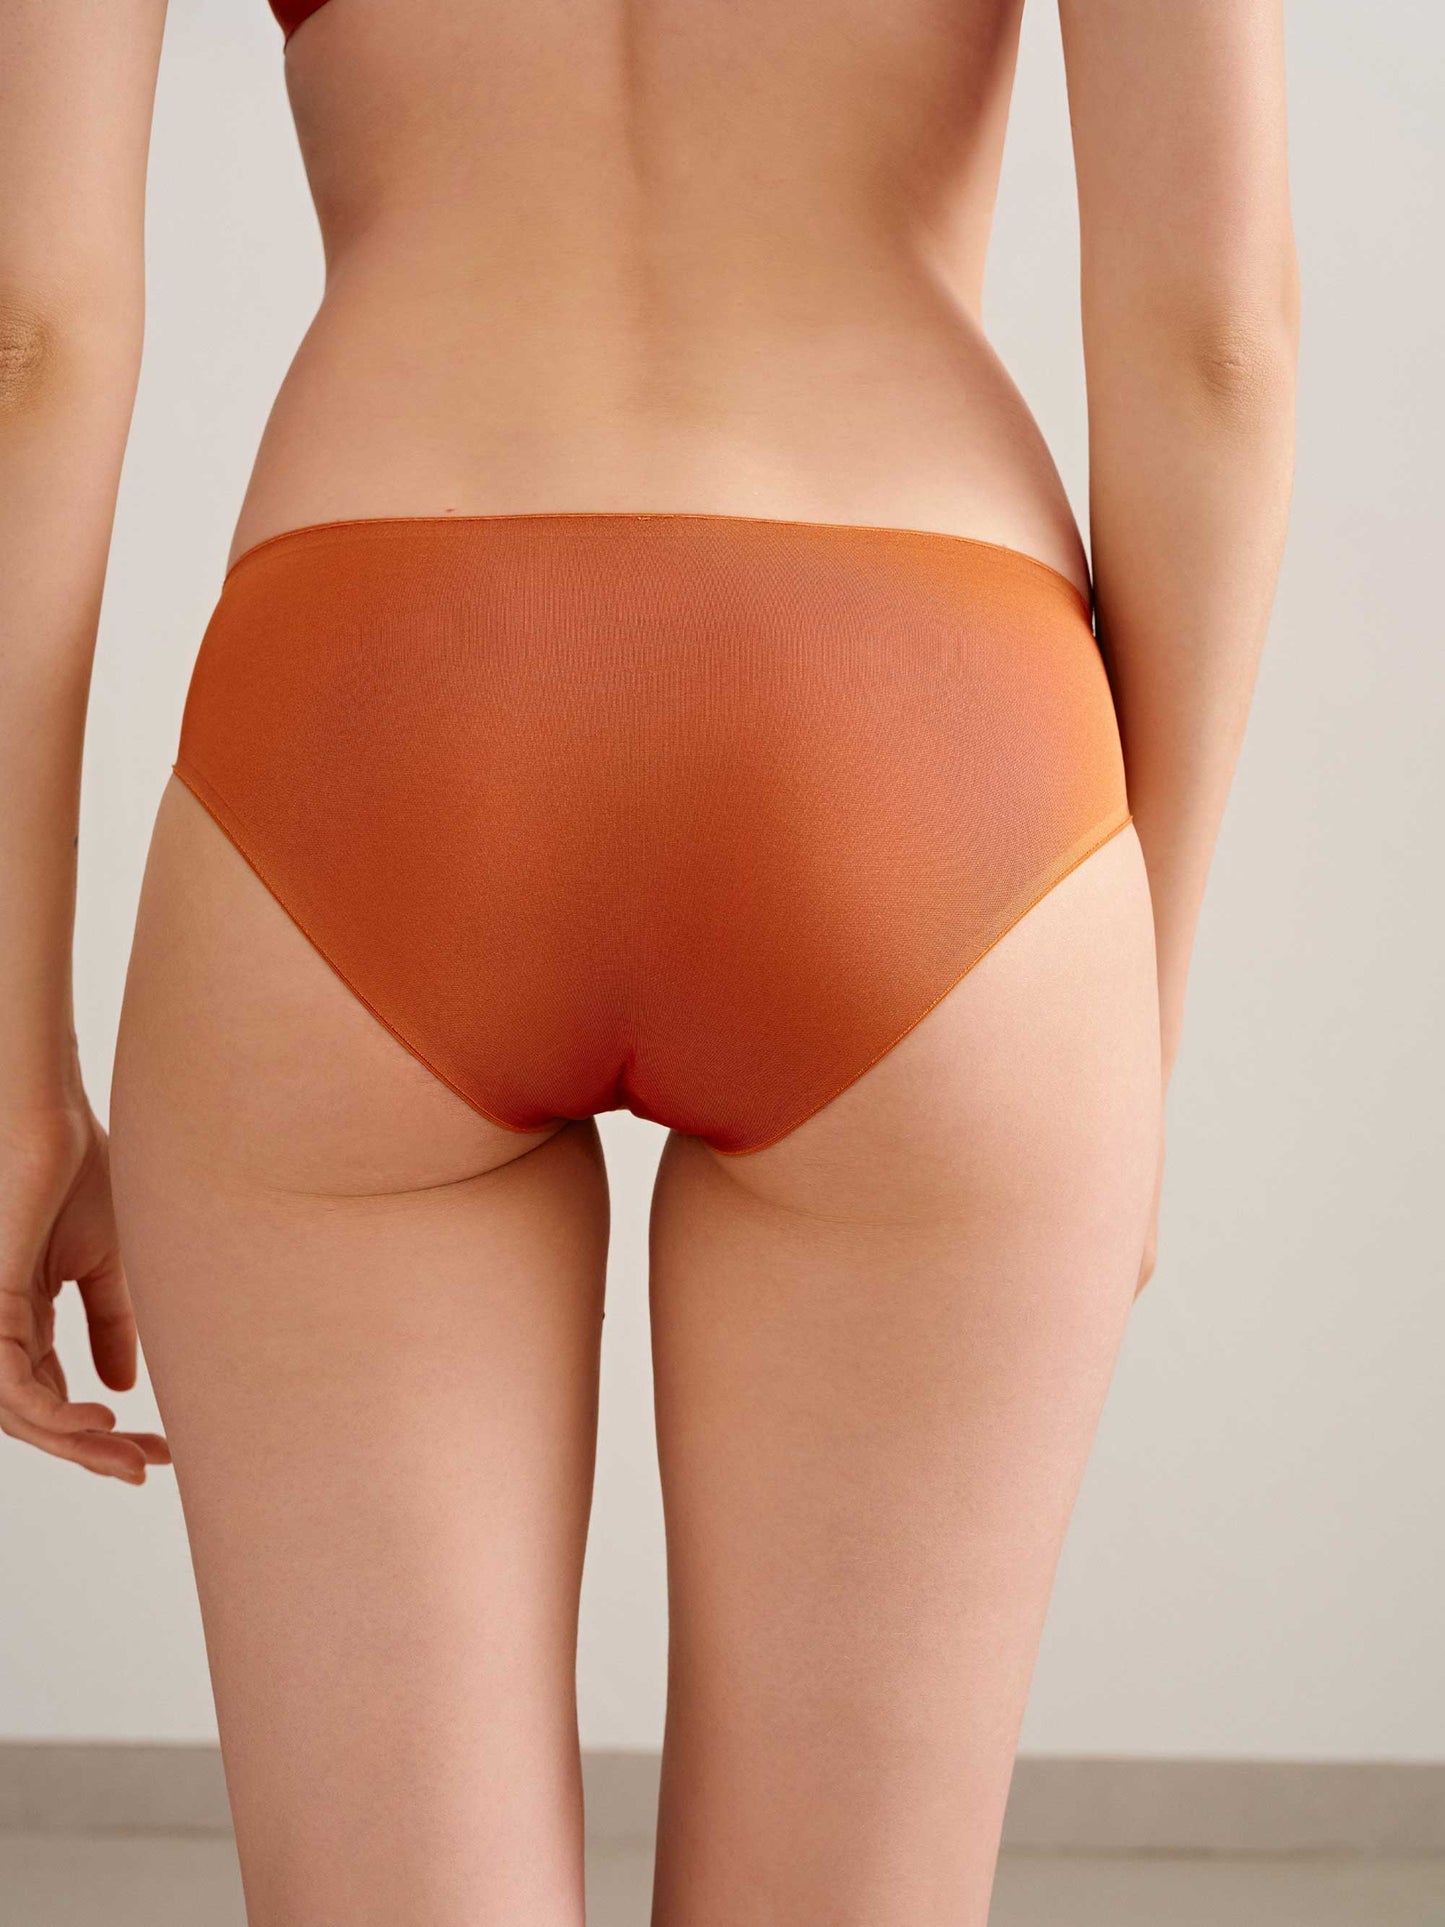 back of woman in orange brief